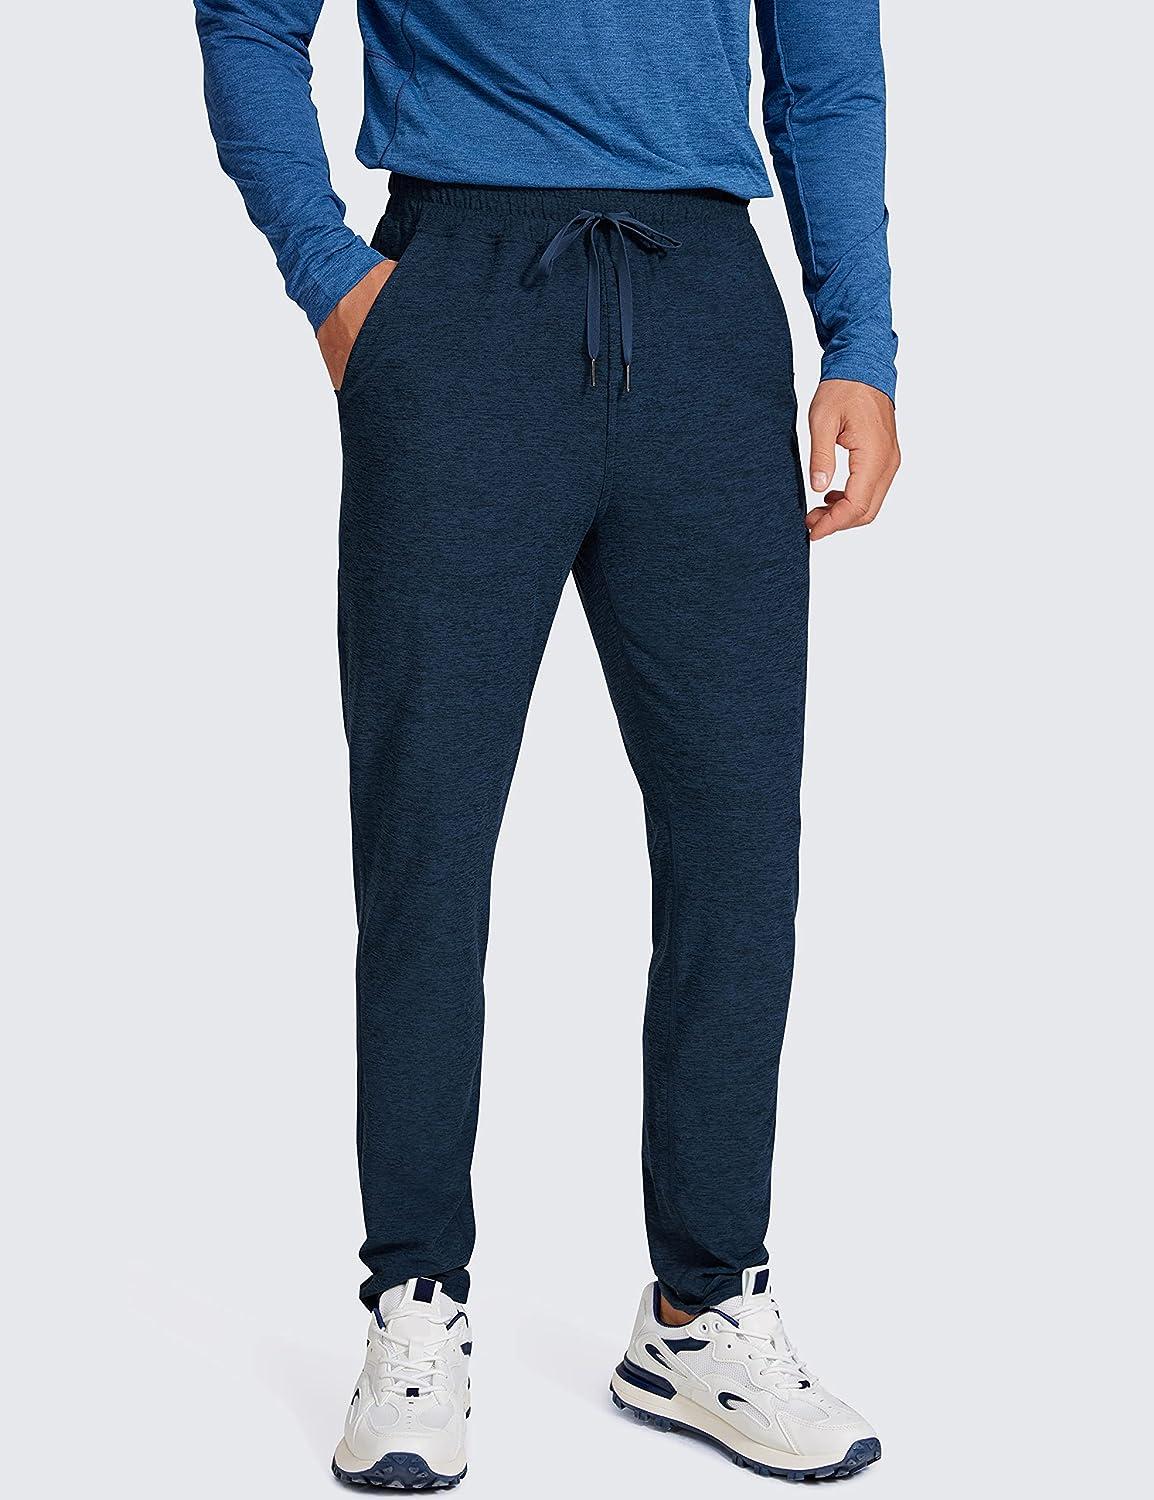 Men Lounge Pants,Stretchy Homewear, Breathable Smooth Fabric Pajamas  Pants,Man Yoga Drawstring Pants